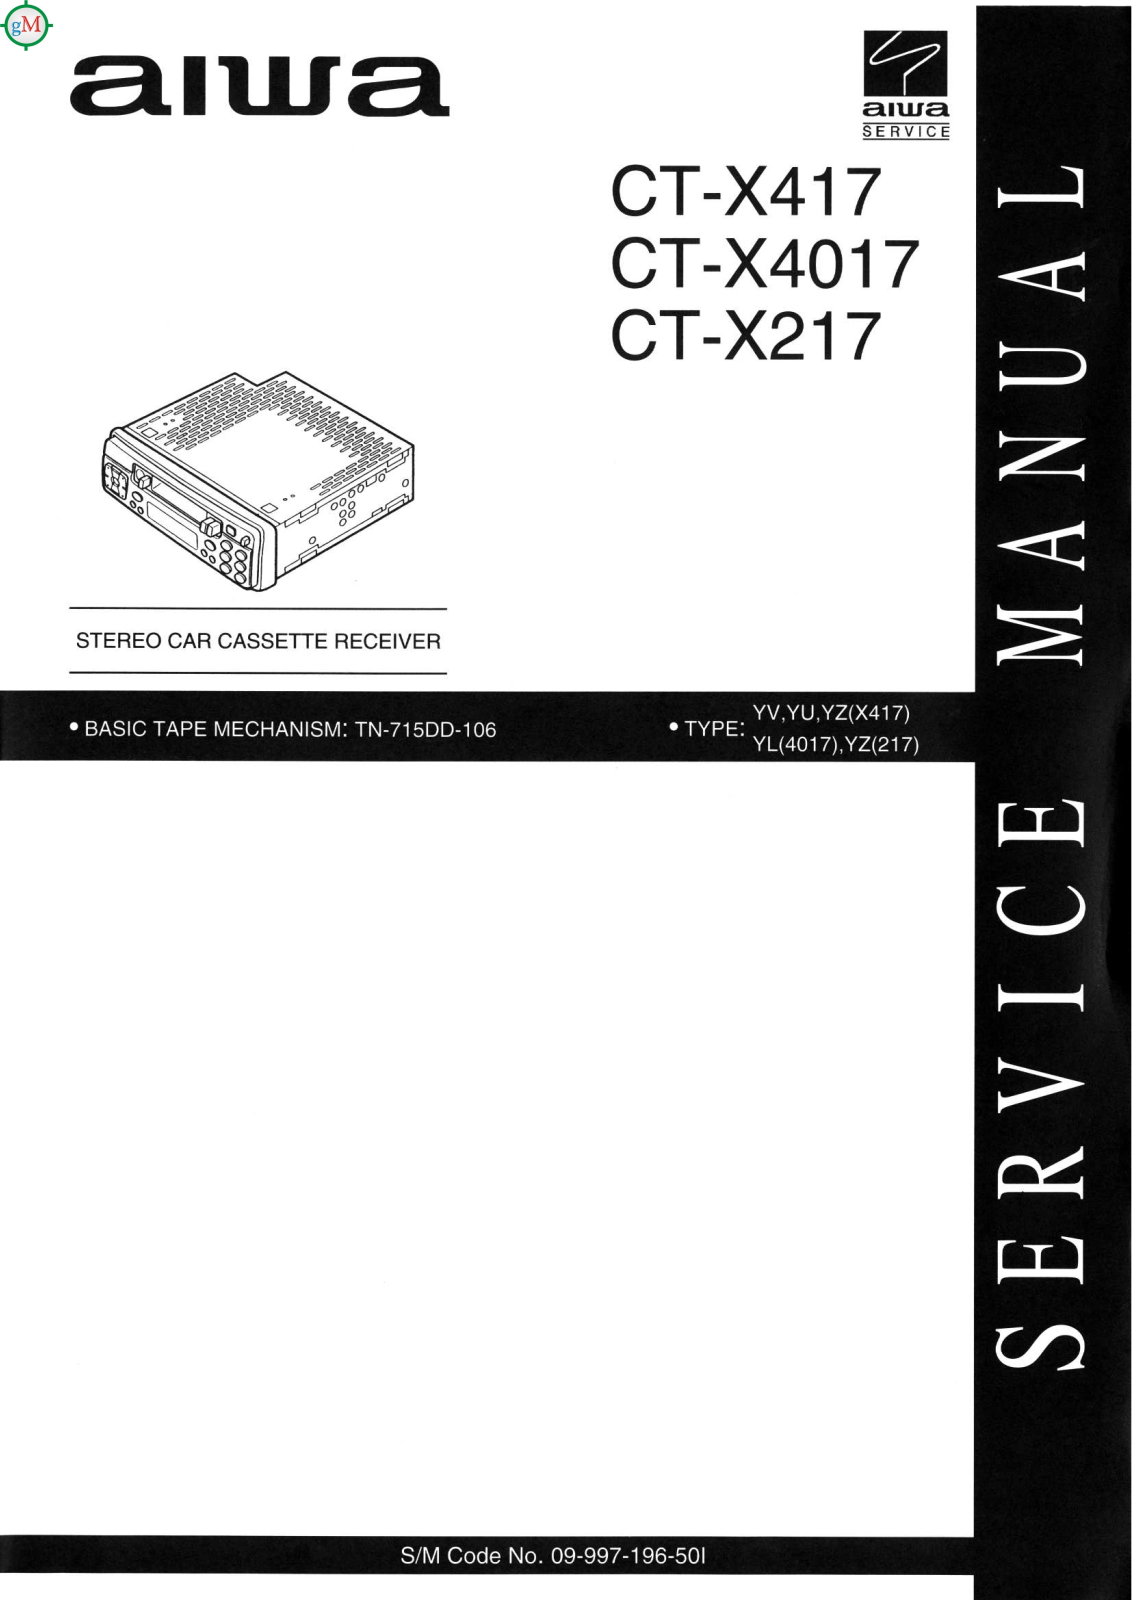 Aiwa CTX-217, CTX-4017, CTX-417 Schematic